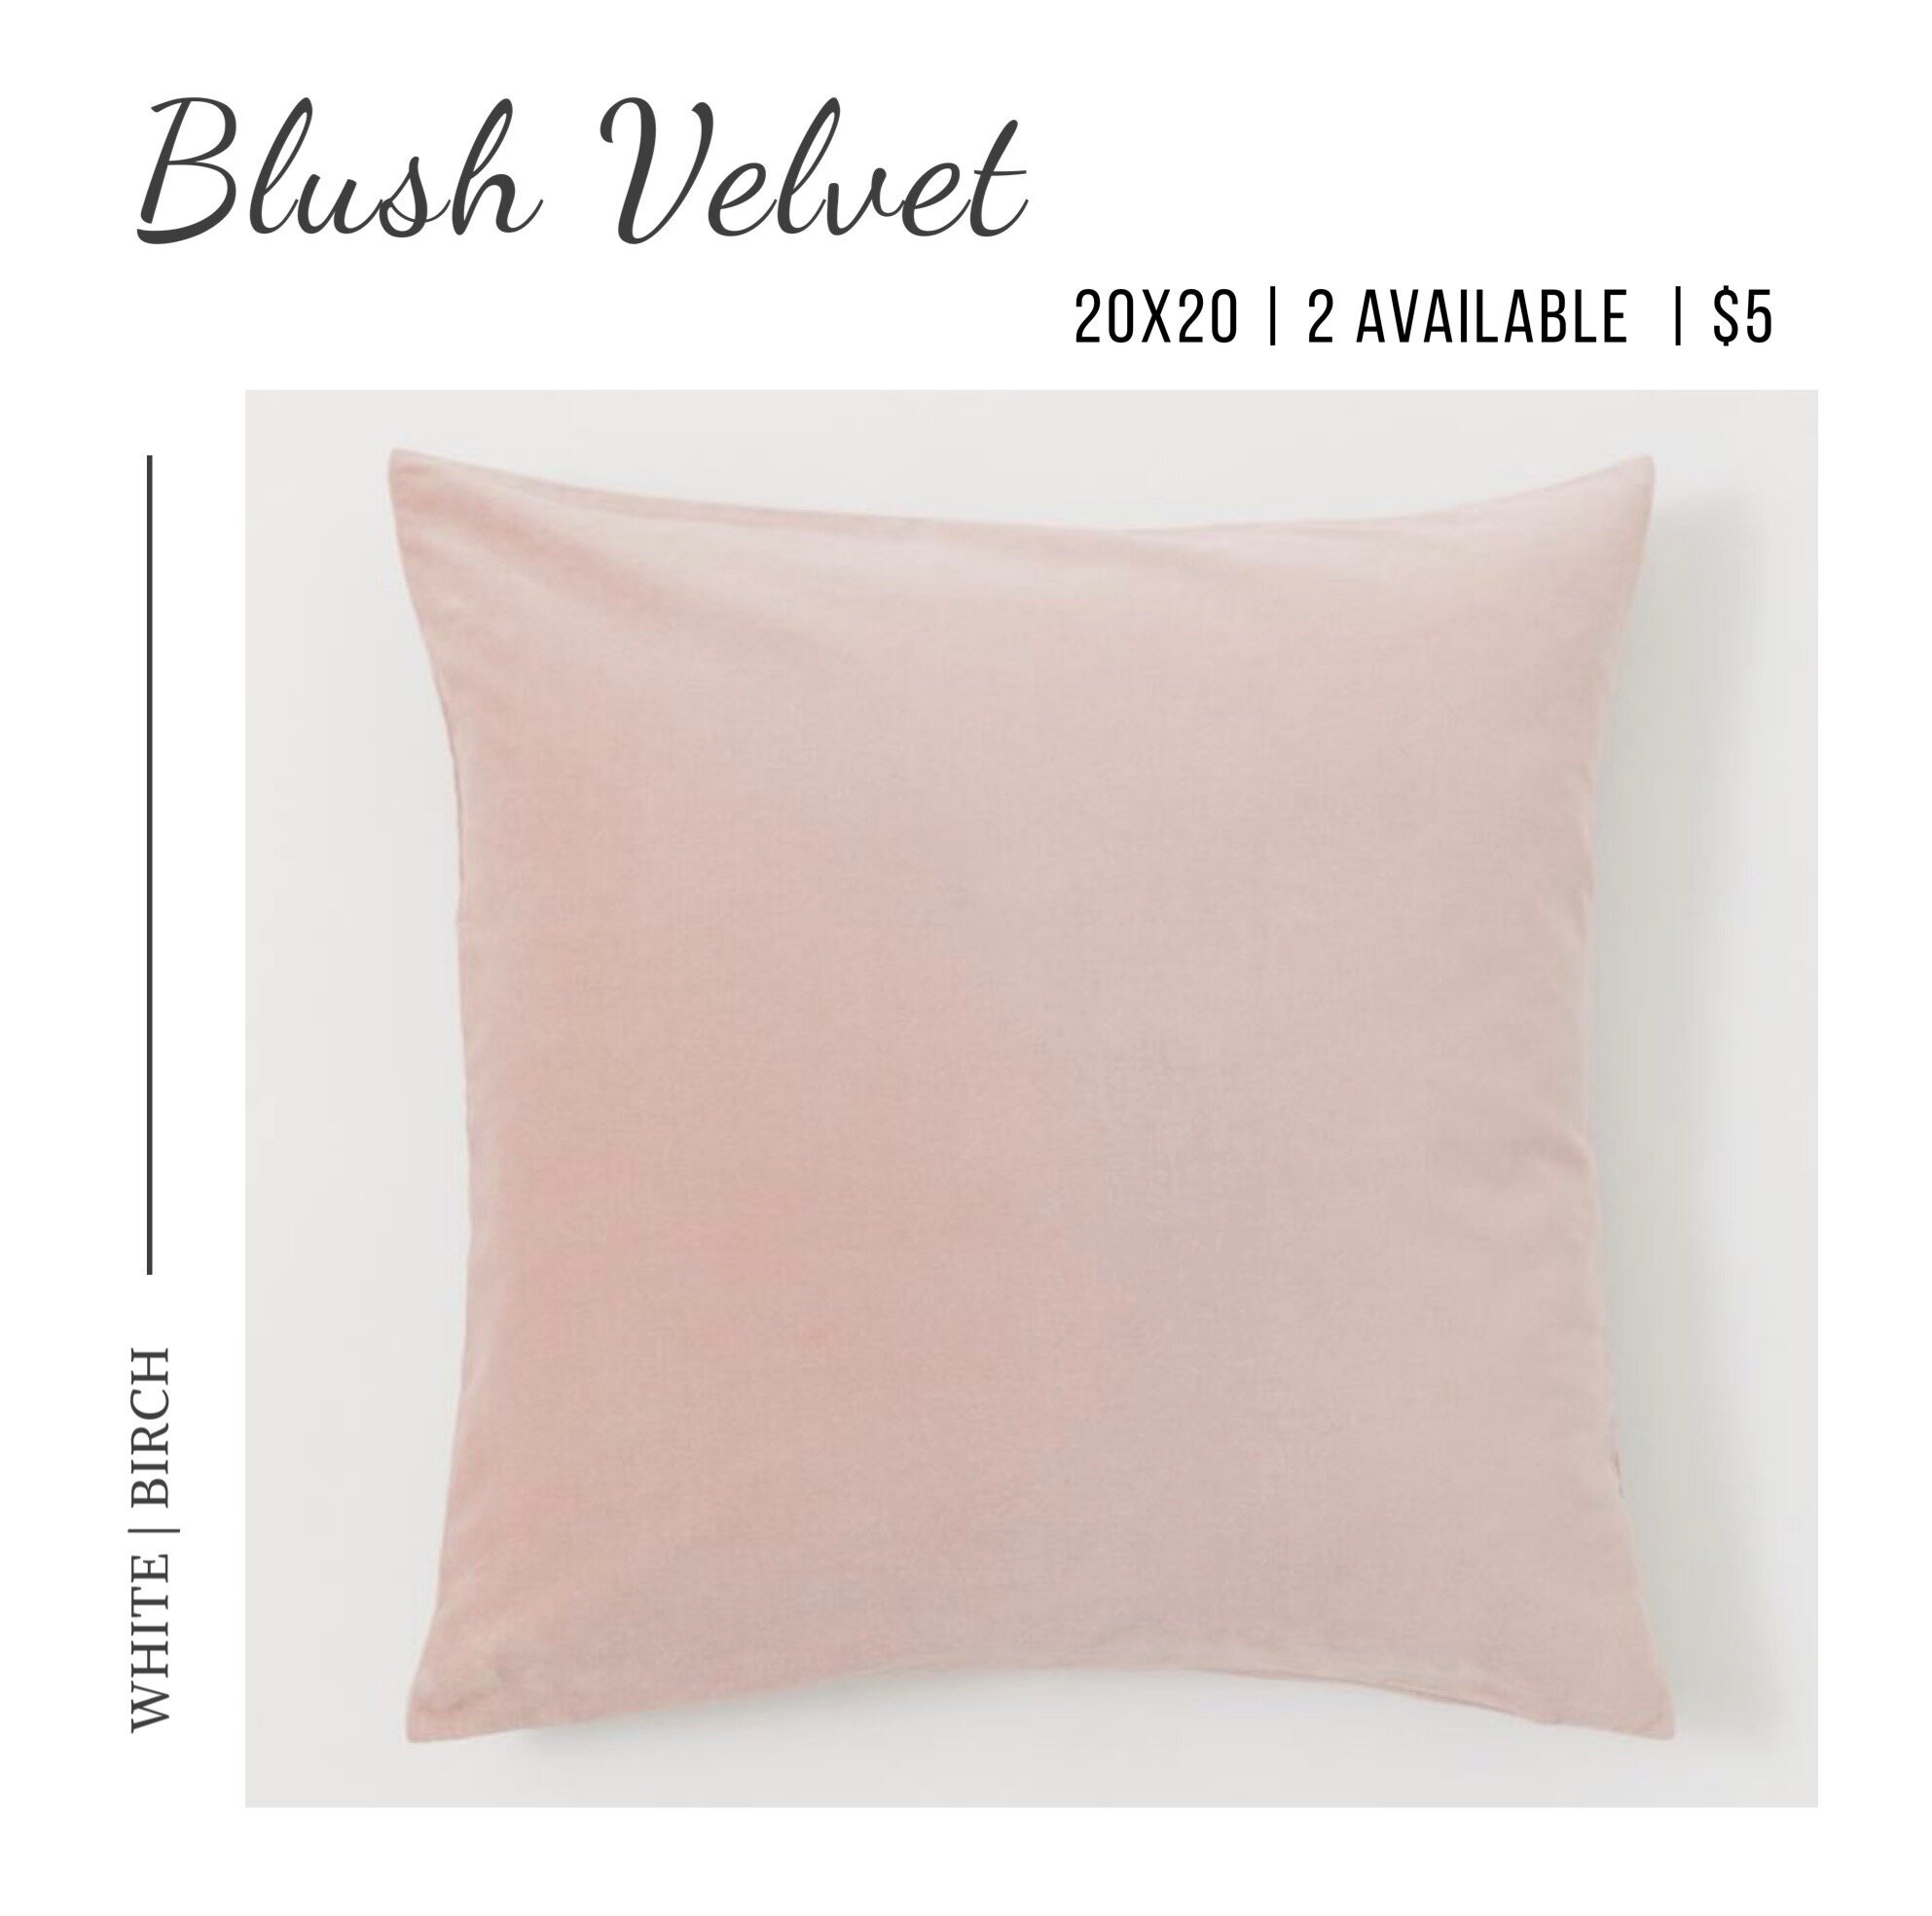 Pillows & Poufs — White Birch Rentals